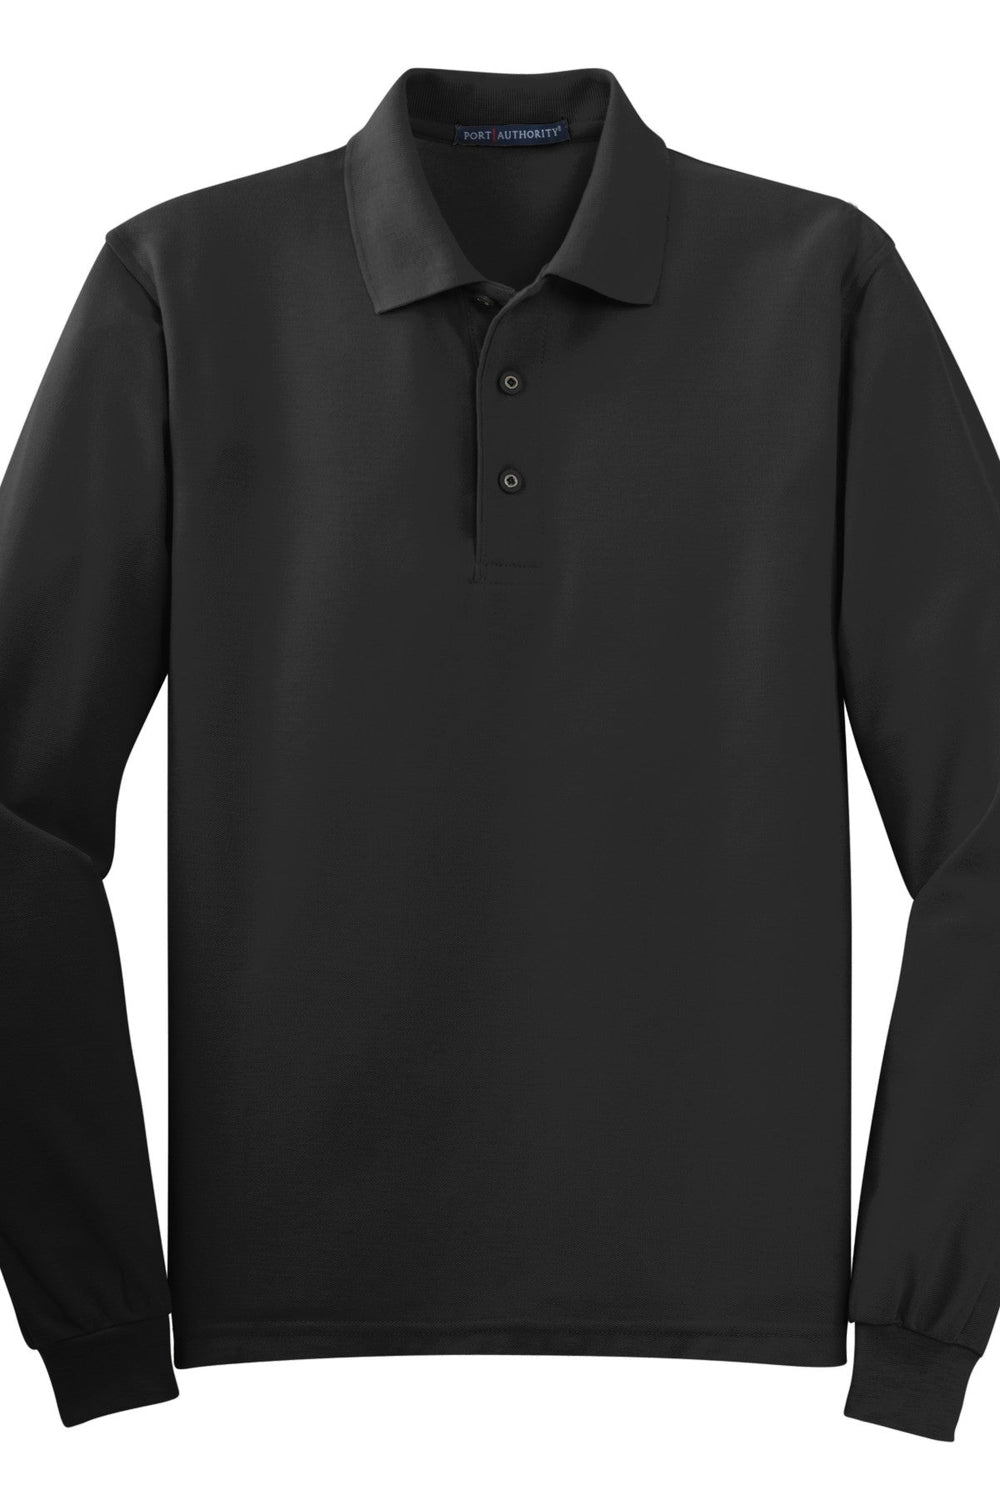 CCS - K500LS Port Authority Unisex Long Sleeve Silk Touch Polo - Premium School Uniform from Pat's Monograms - Just $27! Shop now at Pat's Monograms